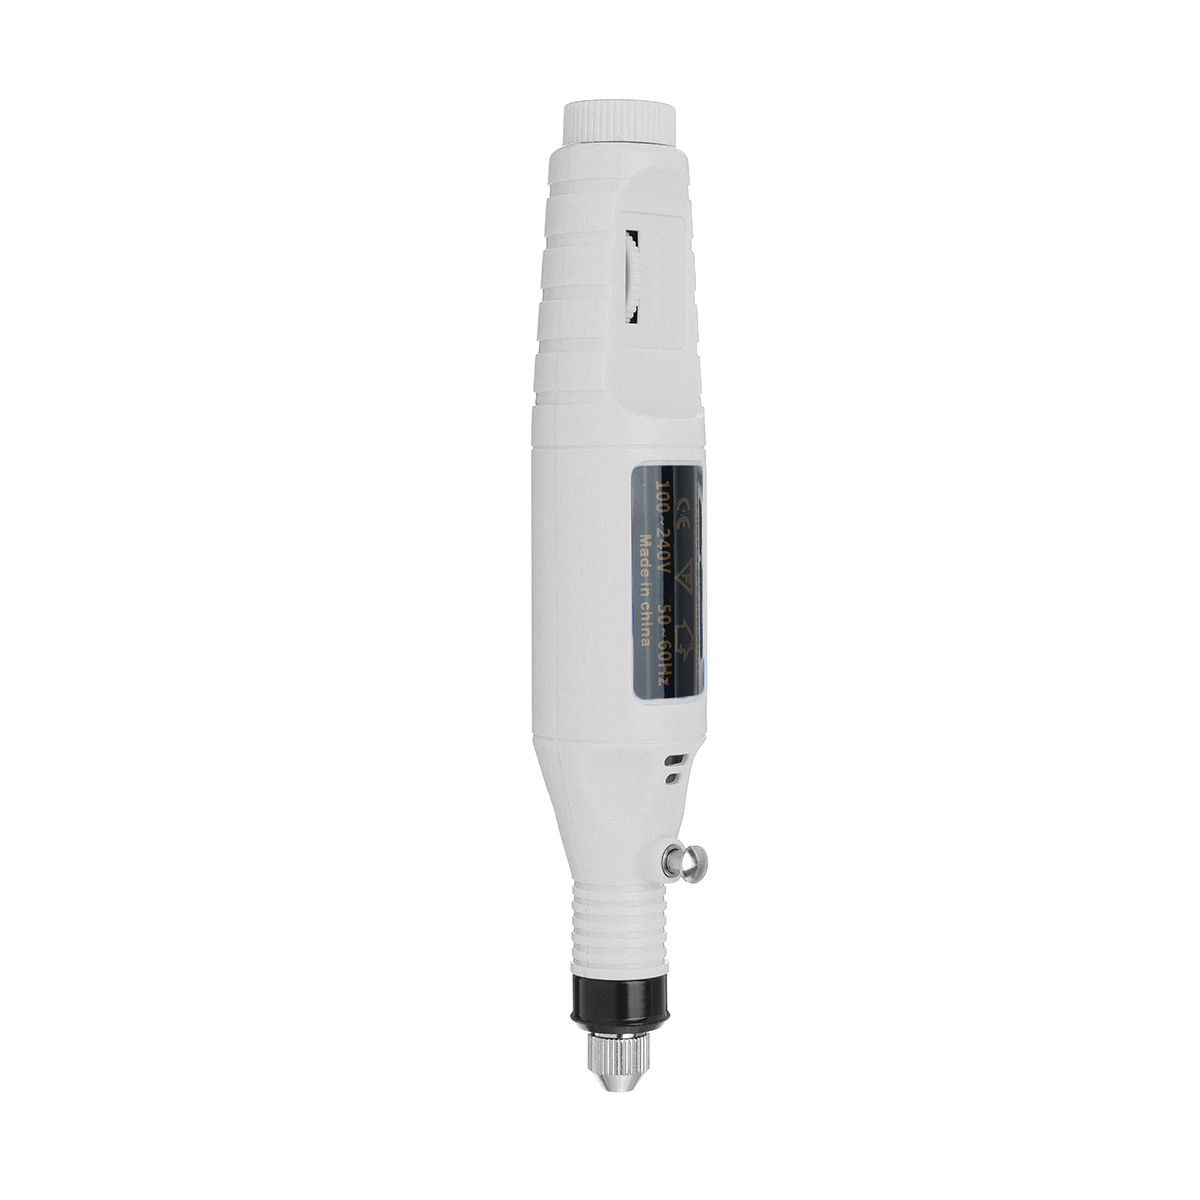 Professional-Acrylic-Electric-Engraving-Pen-Nail-Art-Drill-File-Manicure-Pedicure-Polishing-Tools-Ki-1440373-9